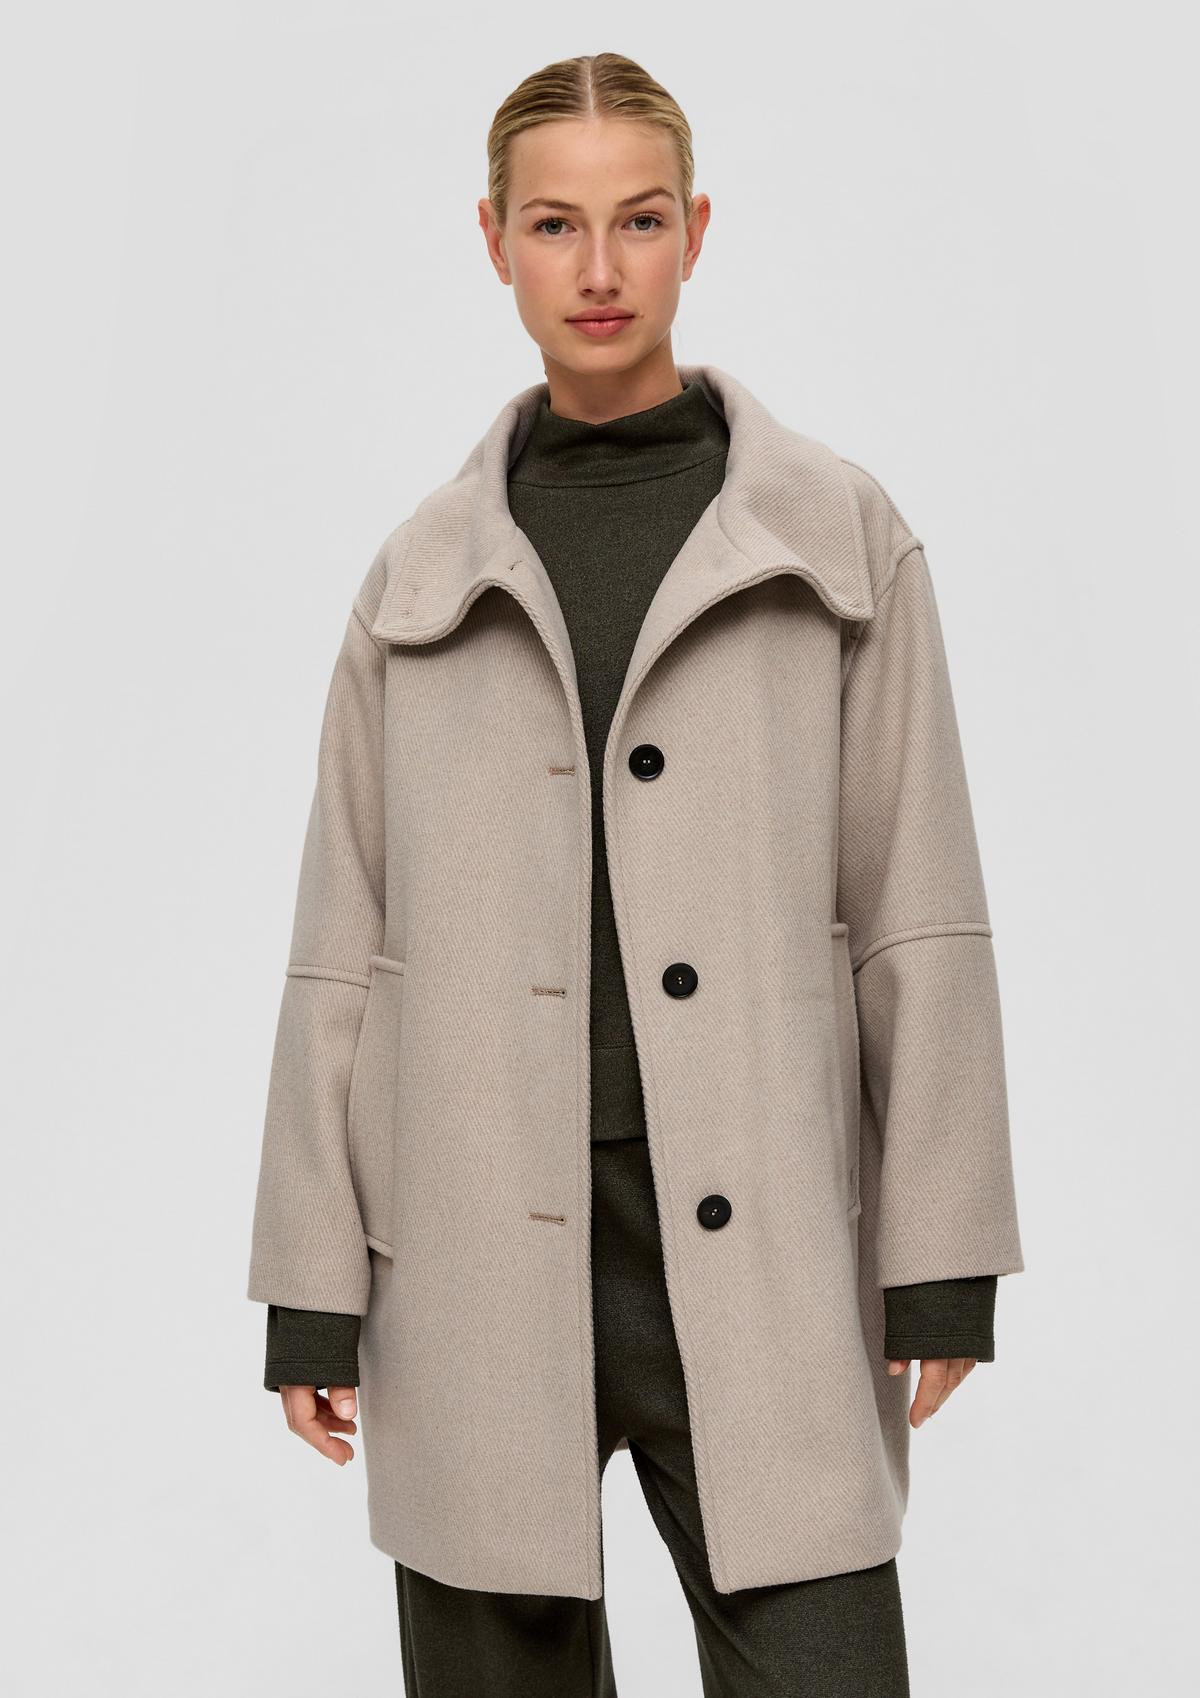 Twill coat in a wool blend